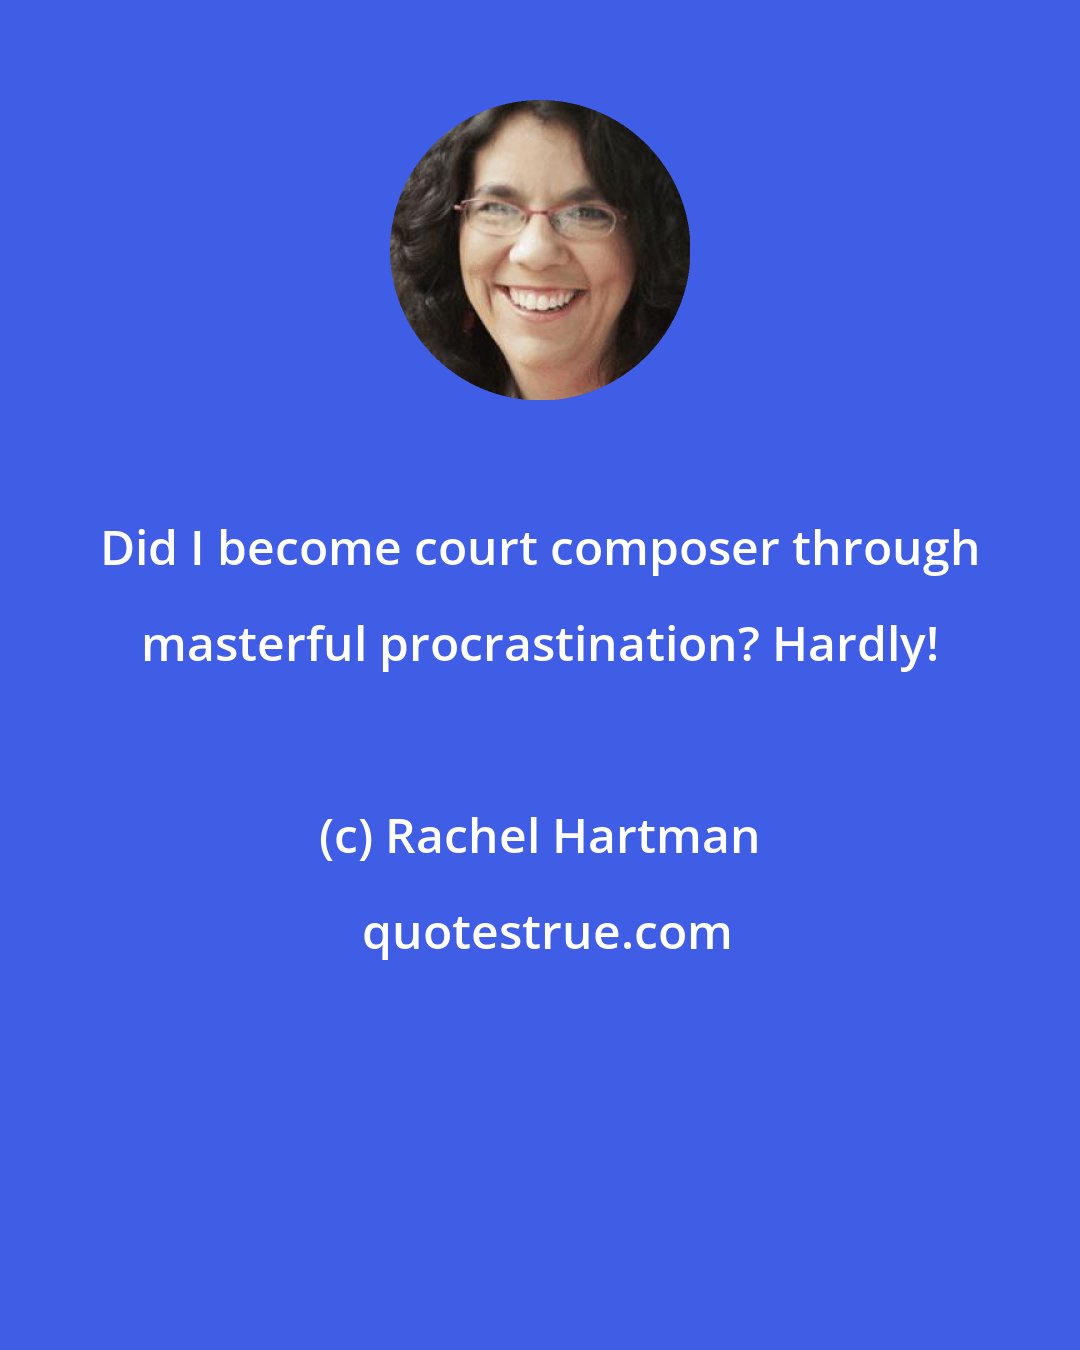 Rachel Hartman: Did I become court composer through masterful procrastination? Hardly!